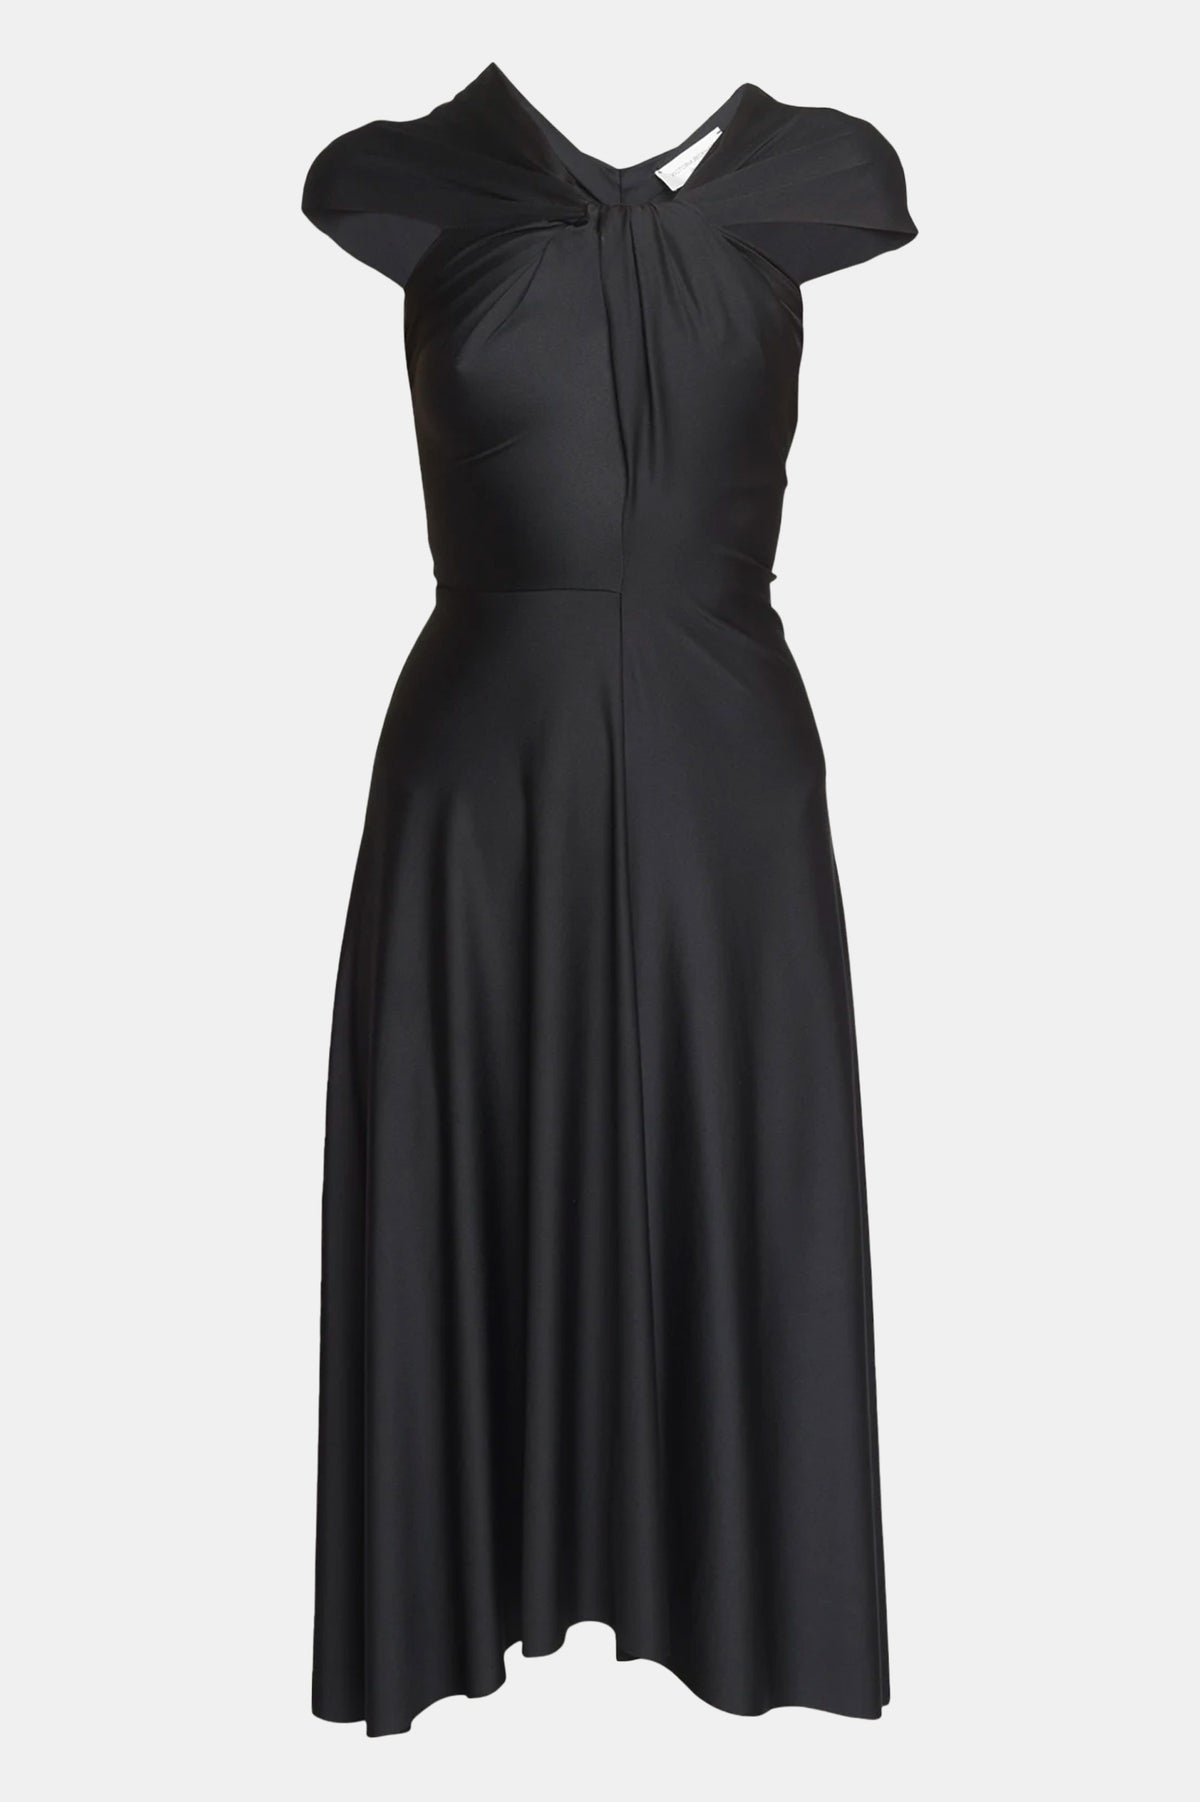 Cap Sleeve Draped Dress in Black